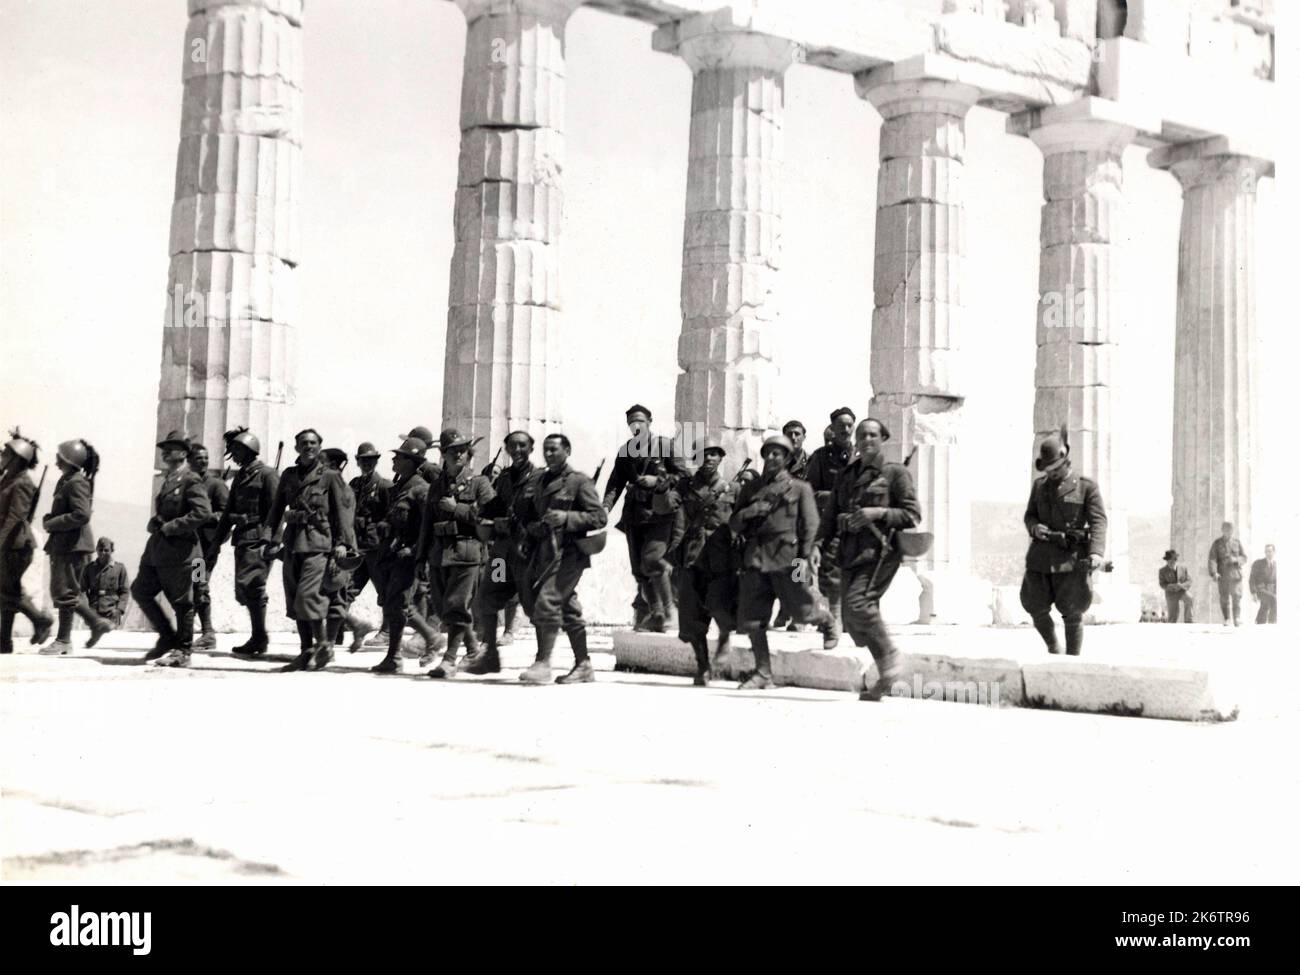 1942 ca. Athens , GREECE : The italian military fascist  troups  invade the Greece. In this photo some of italian platoons ( Alpini and Bersaglieri ) visiting the Acropolis celebrated Temple monuments . Unknown photographer - ALPINO -- SECONDA GUERRA MONDIALE - World War 2nd - WWII - FRONTE GRECO - ATENE - GRECIA - ACROPOLI - miliari soldati italiani - COLONIALISMO - COLONIALISM - FASCIST - FASCISTA - FASCISMO - FASCISM - TURISMO - tourism - archeology - archeologia - tempio - temple - templio - HISTORY - FOTO STORICHE ---  Archivio GBB Stock Photo